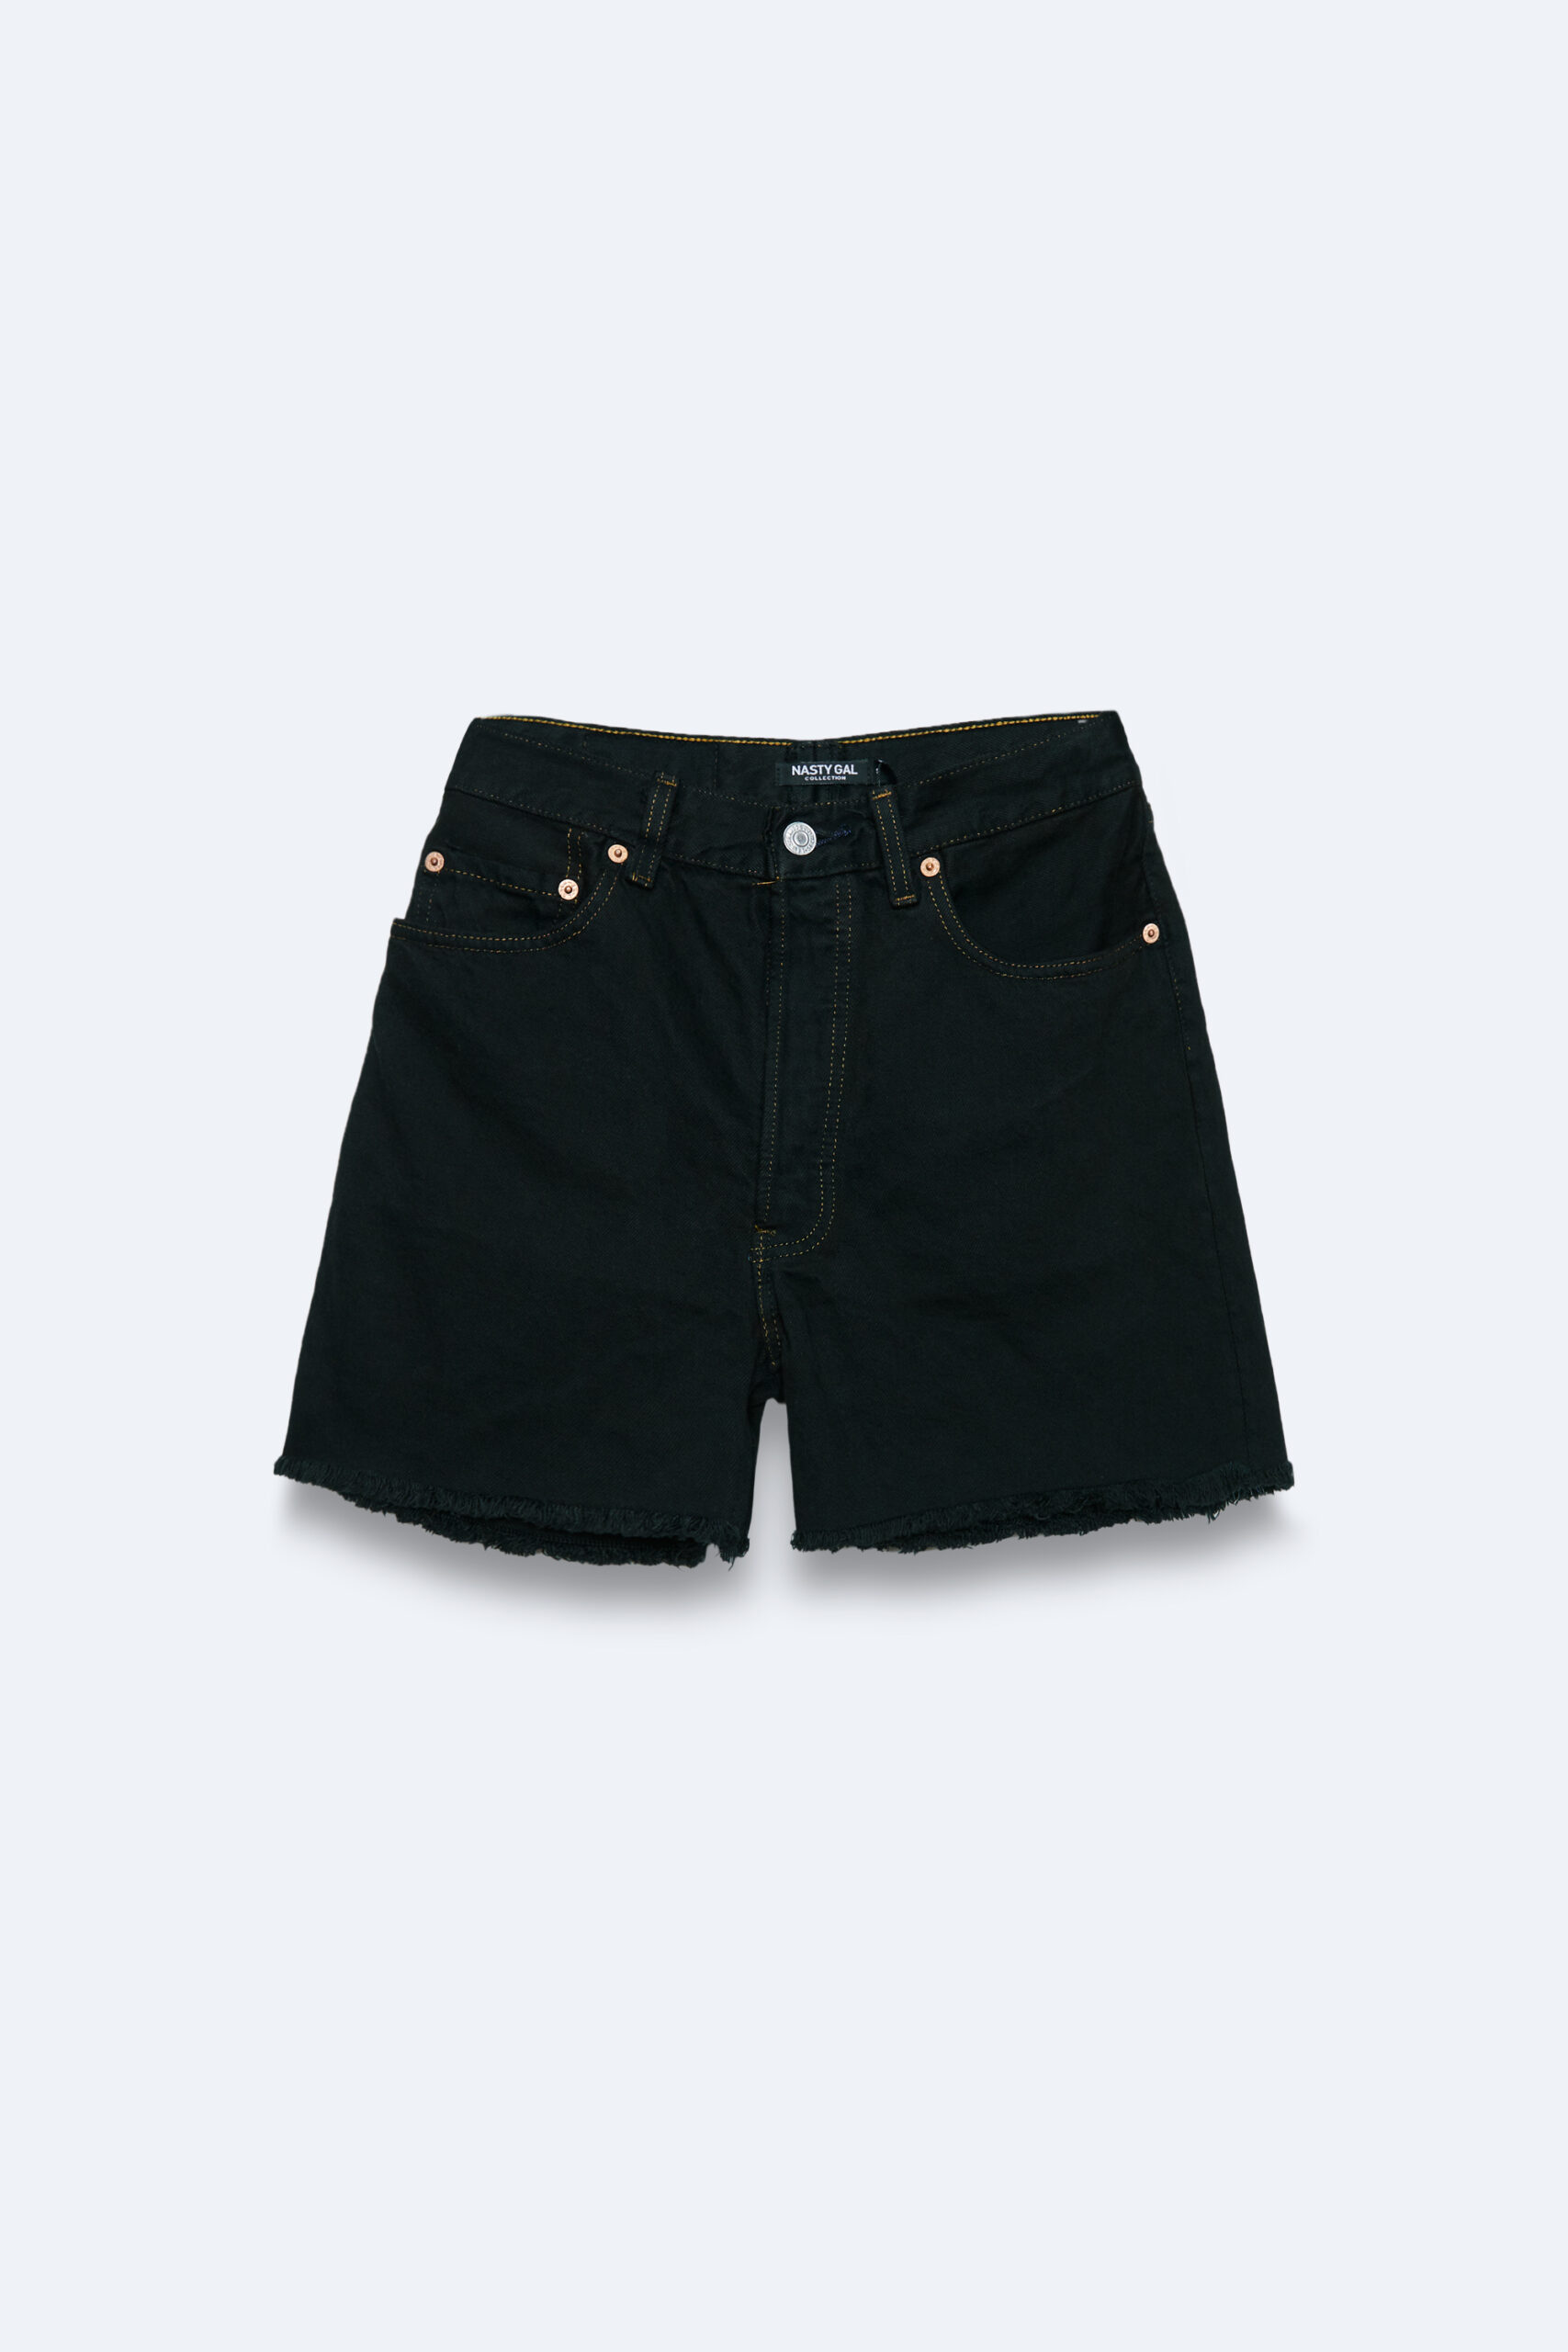 Vintage Reclaimed Branded Jean Shorts 